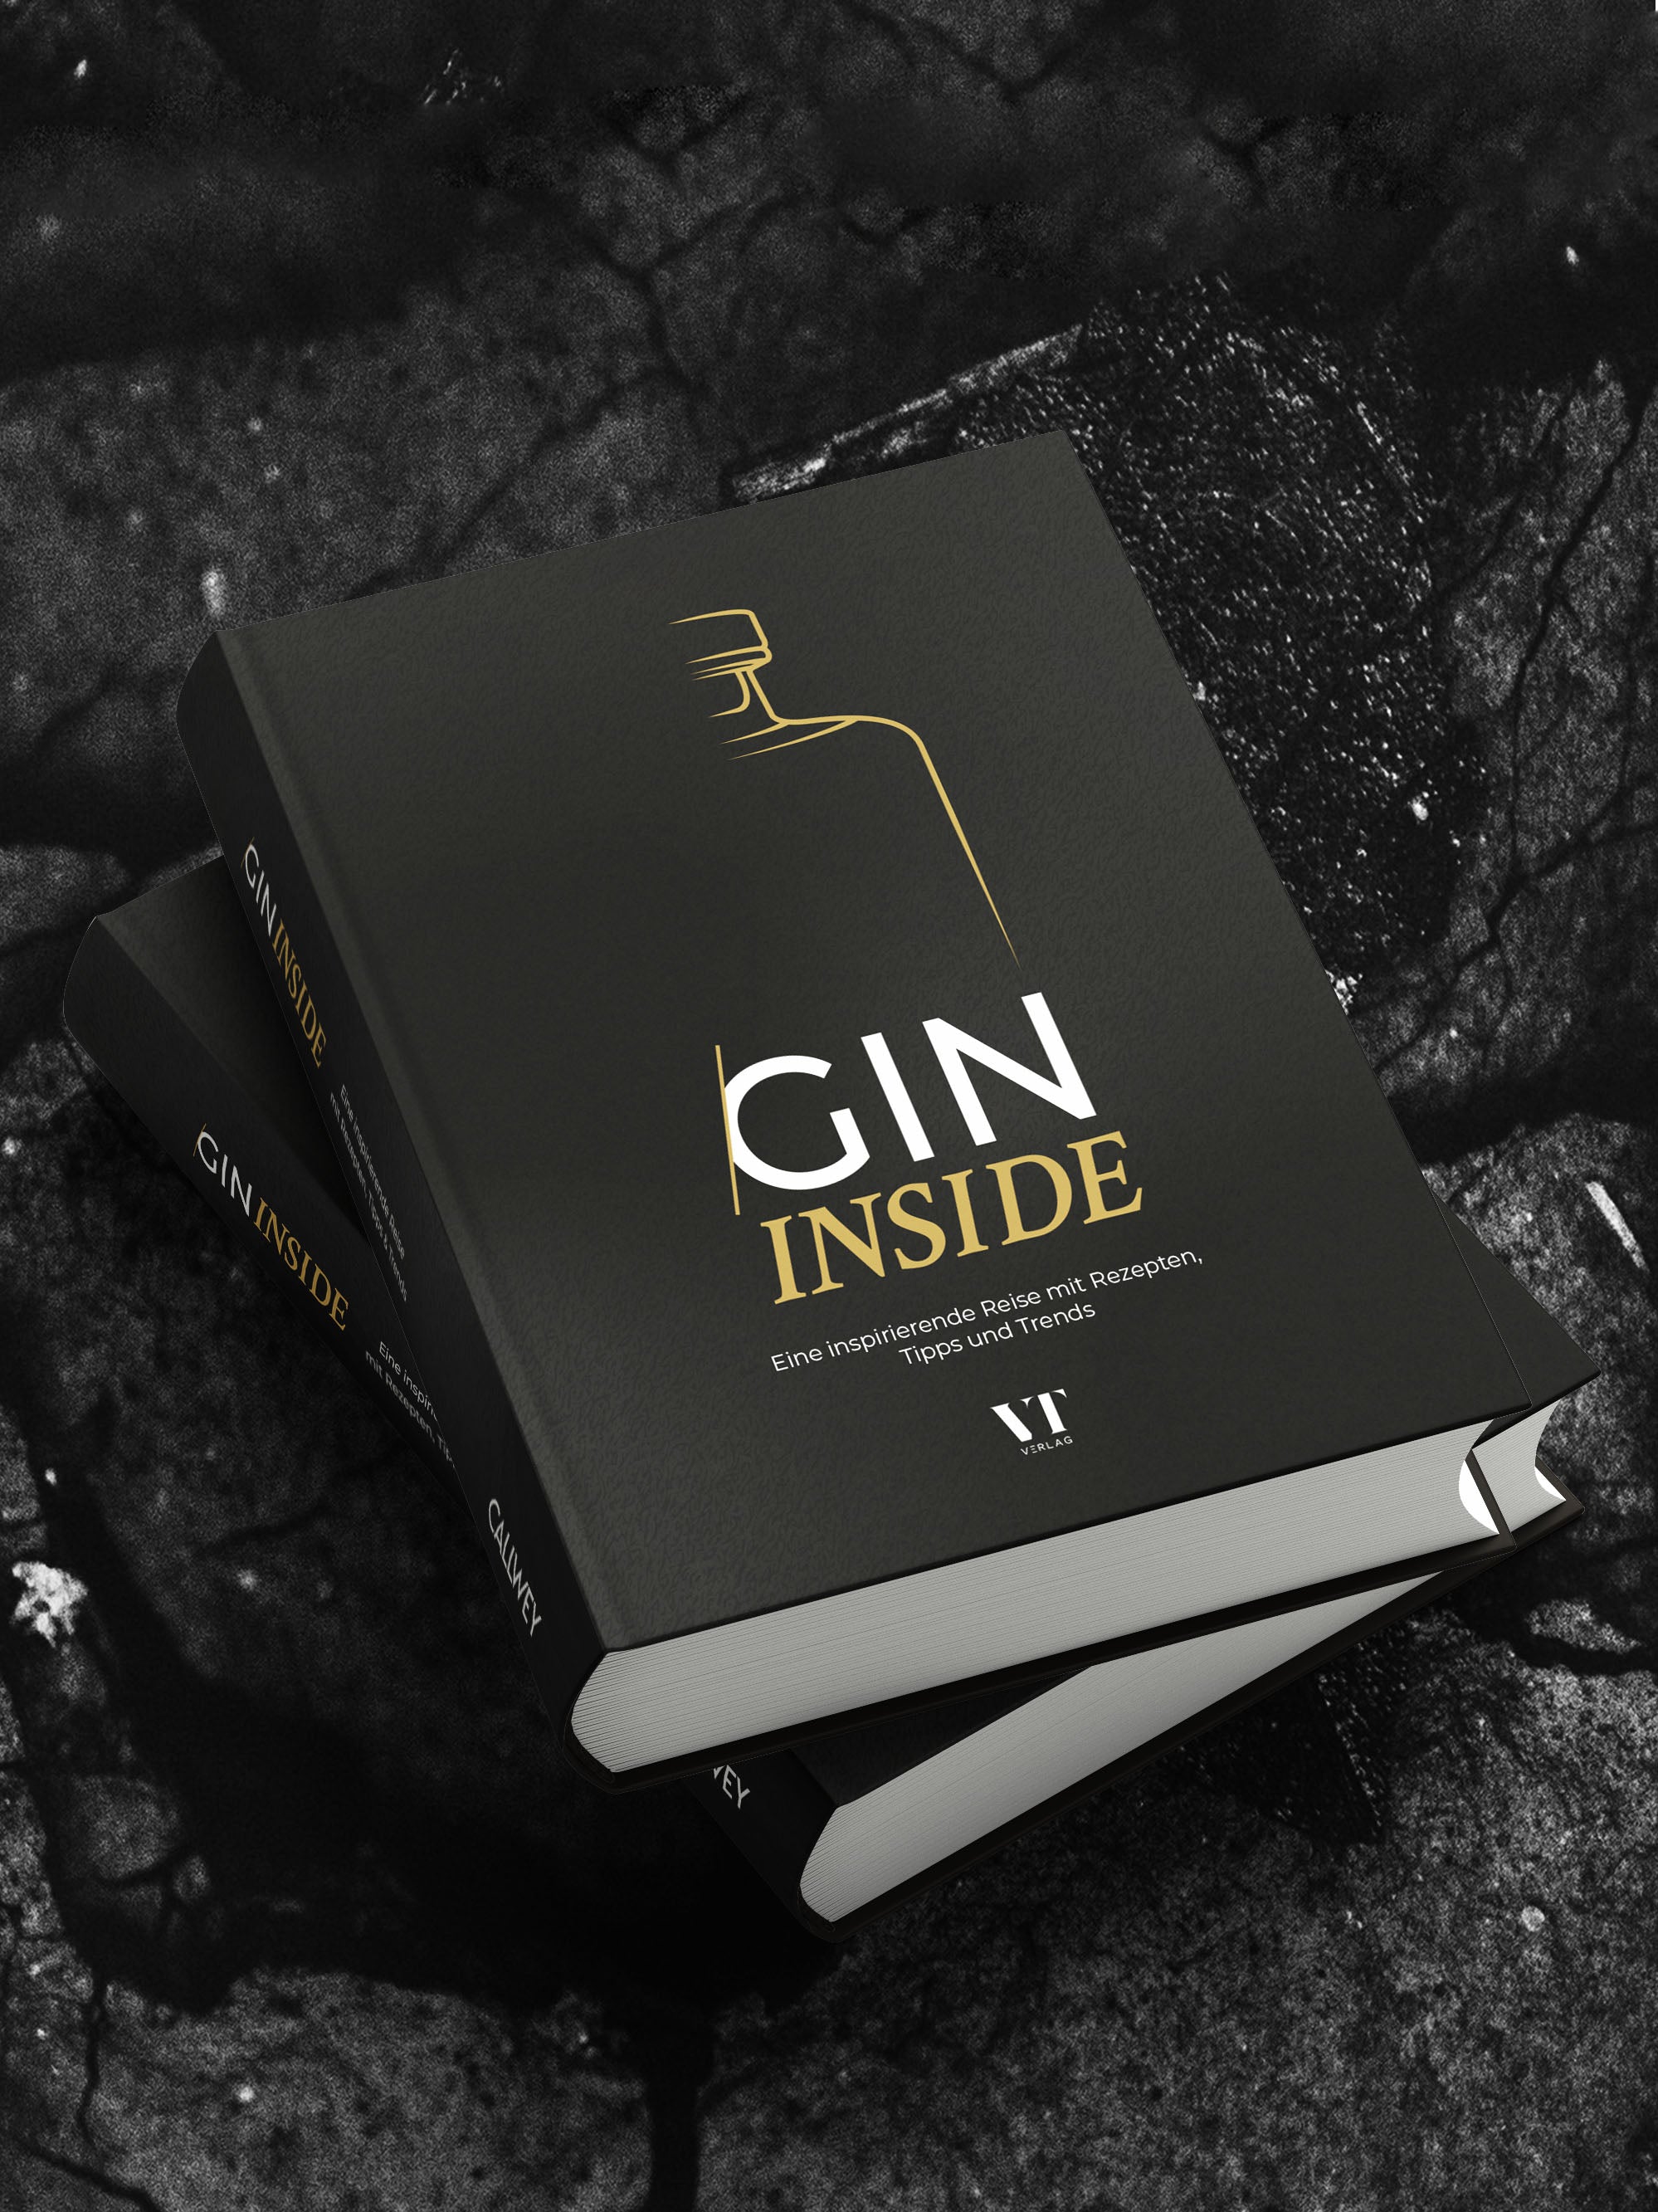 Gin Inside - Das Gin-Buch